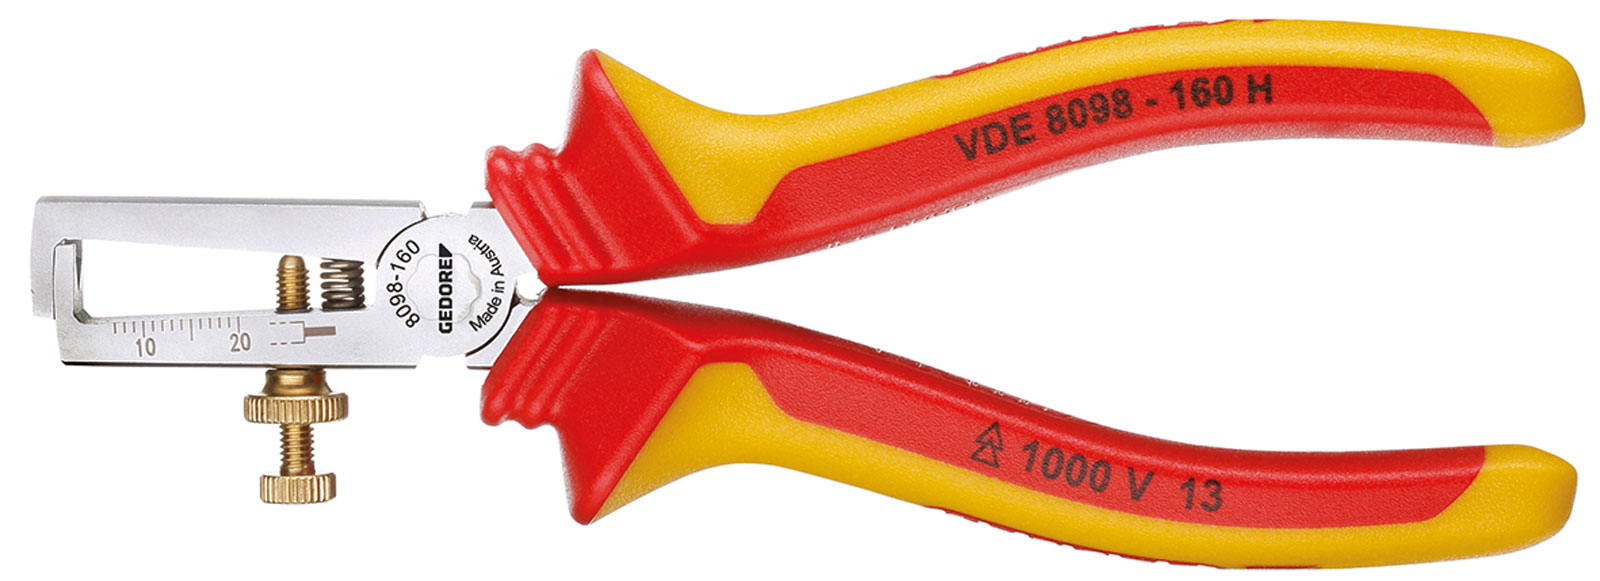 Picture of VDE 8098-160 H VDE-Abisolierzange mit Hüllenisolierung 160 mm